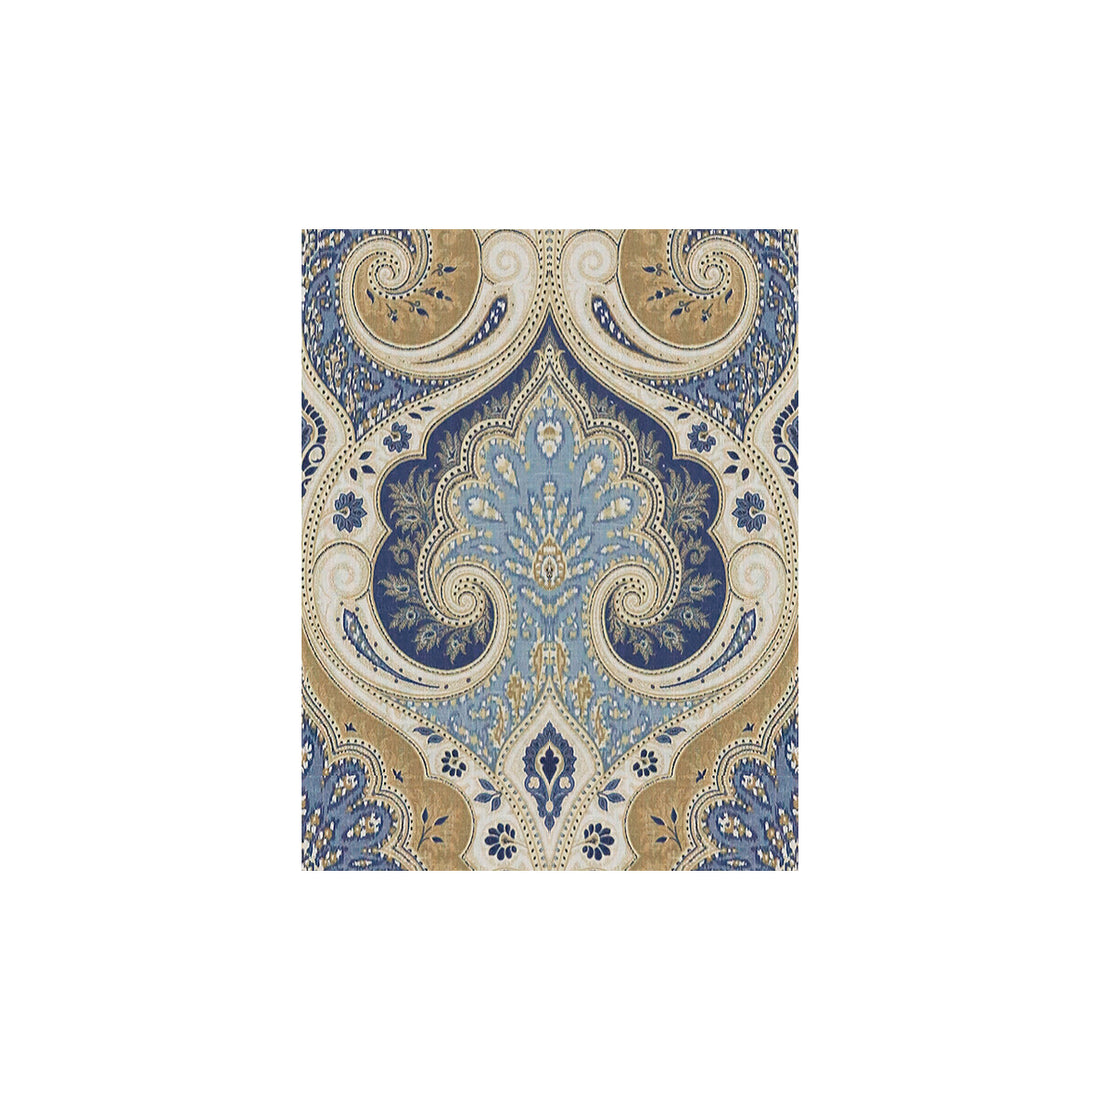 Latika fabric in delta color - pattern LATIKA.516.0 - by Kravet Design in the The Echo Design collection